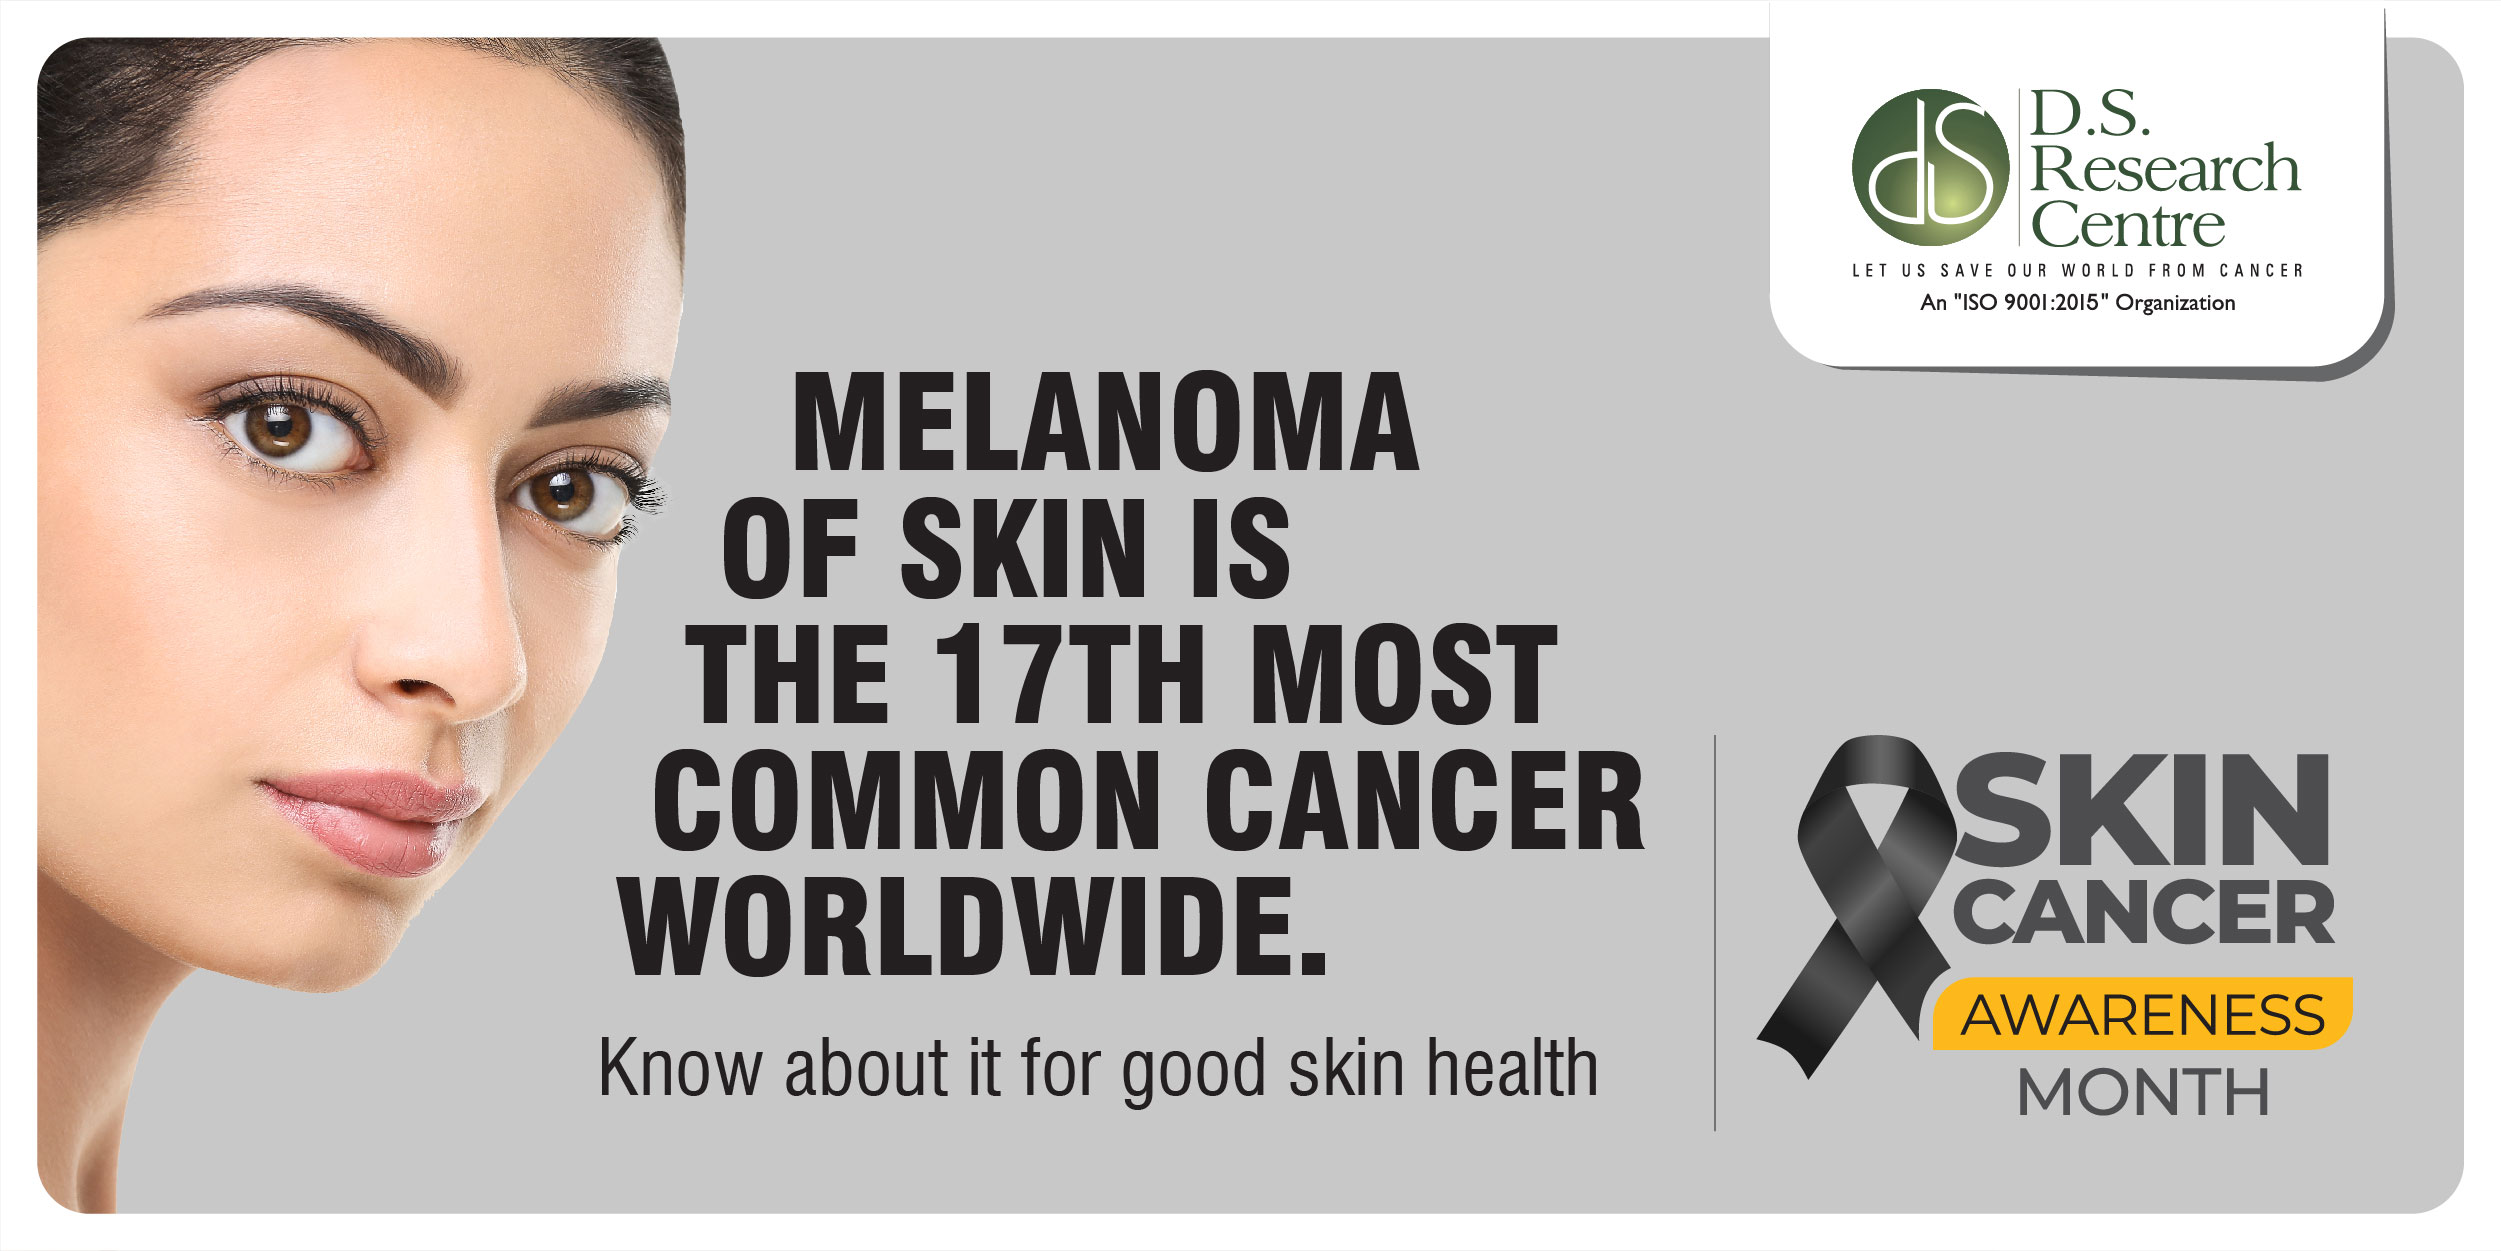 Skin Cancer Awareness Month